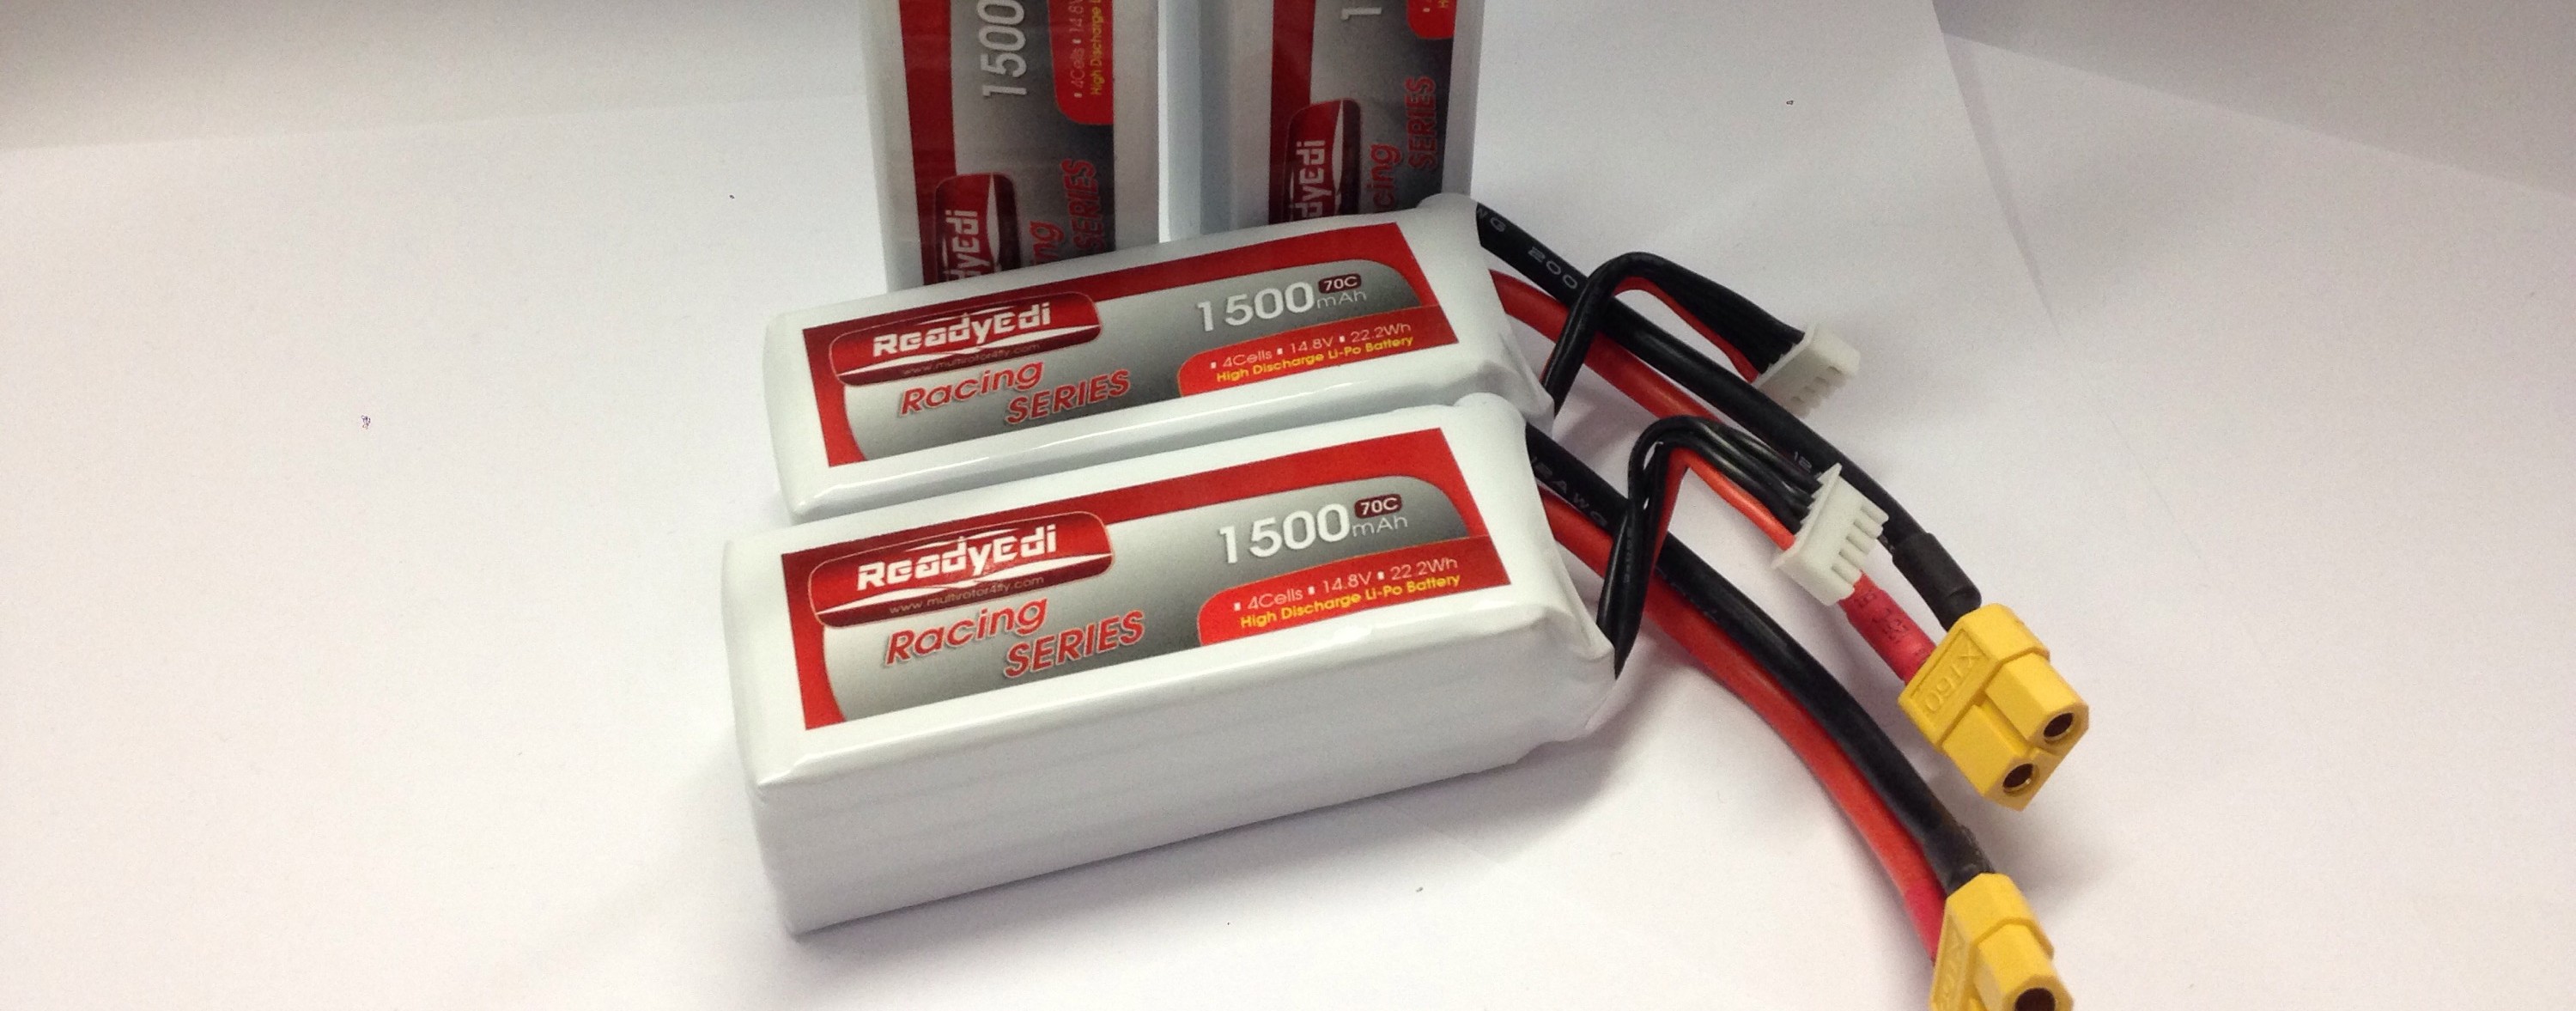 ReadyEdi miniquad batteries